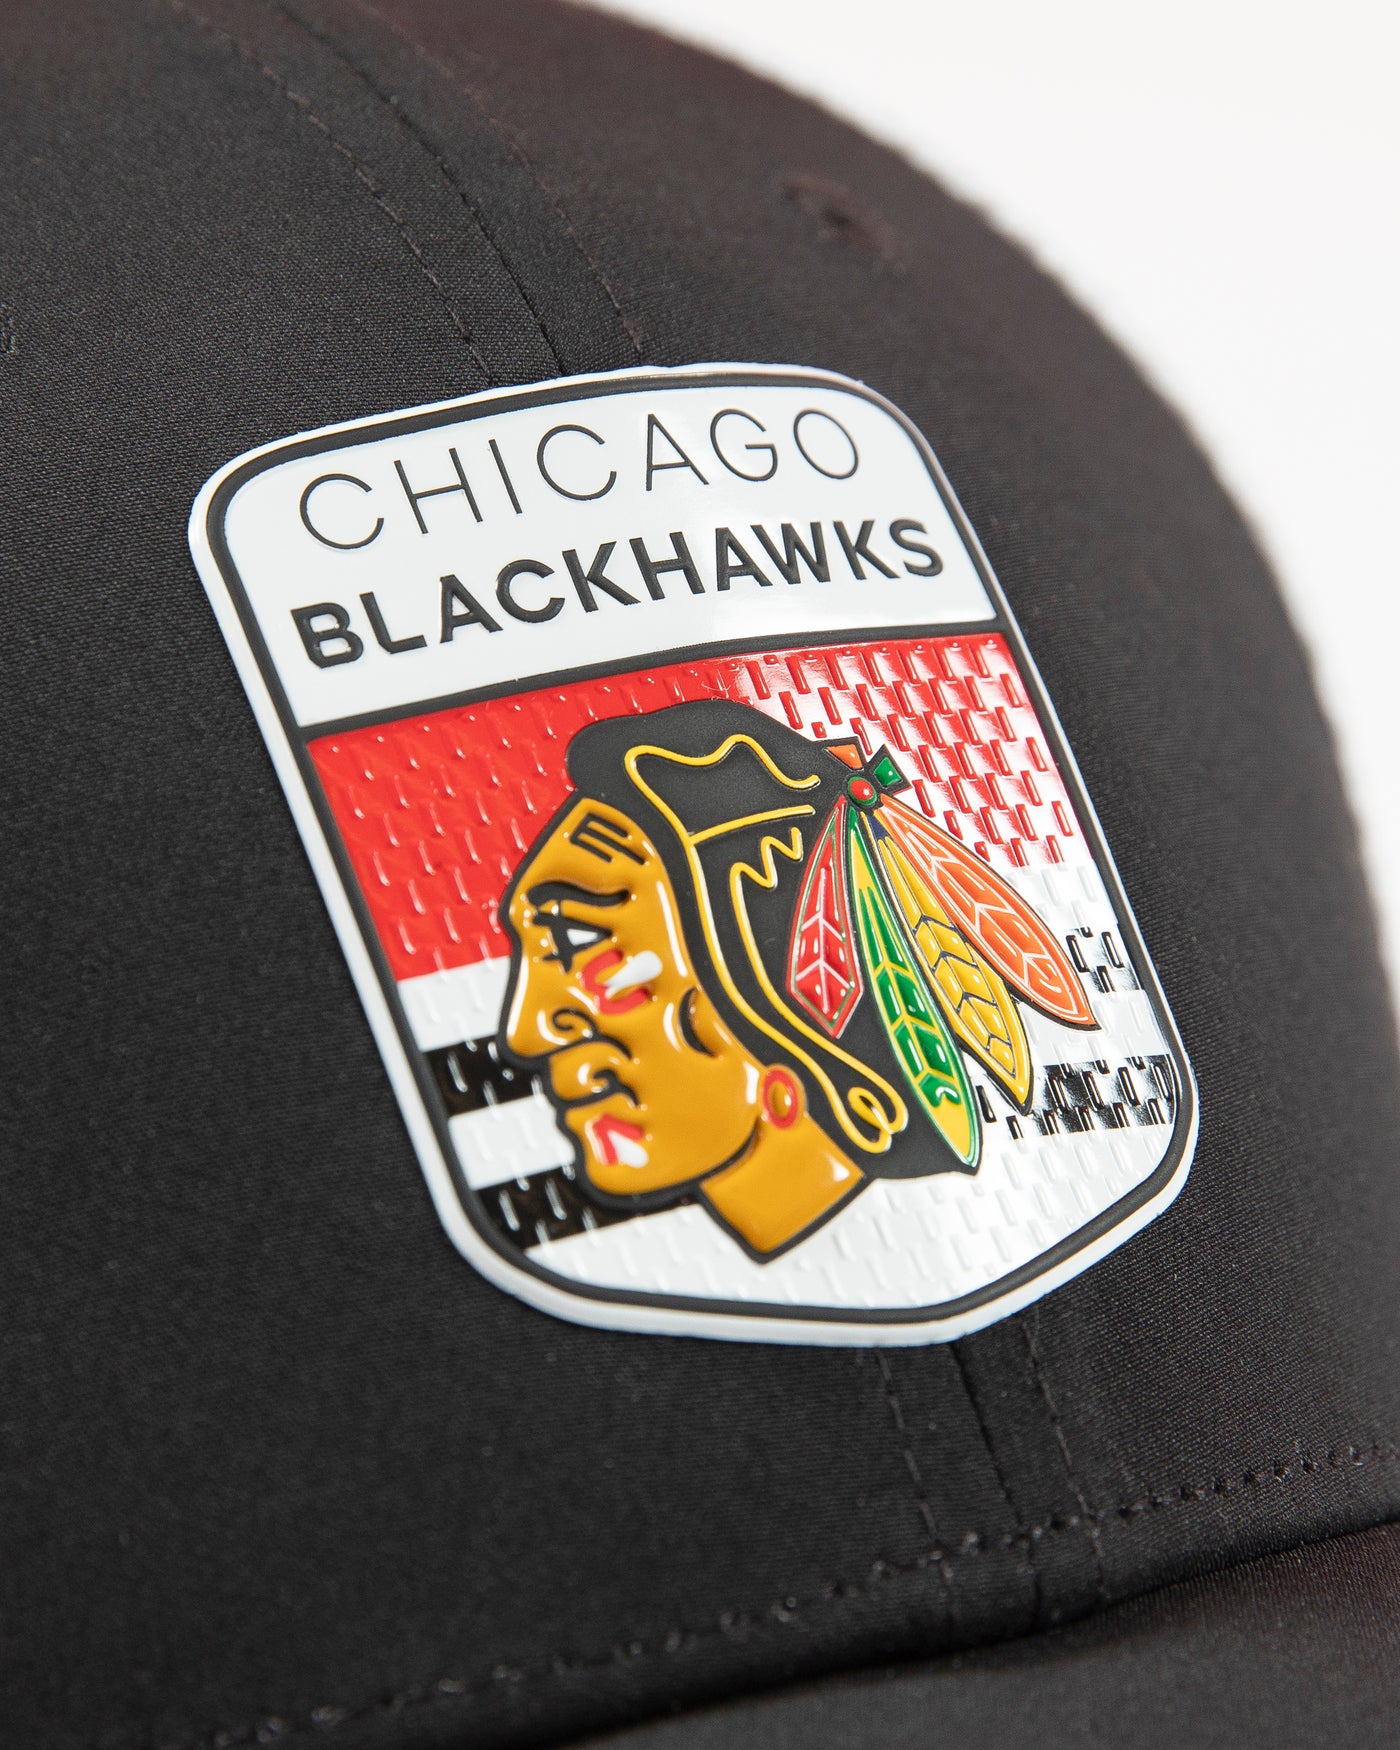  Reebok Chicago Blackhawks Draft Structured Flex Fit Hat,  Large/X-Large : Sports & Outdoors